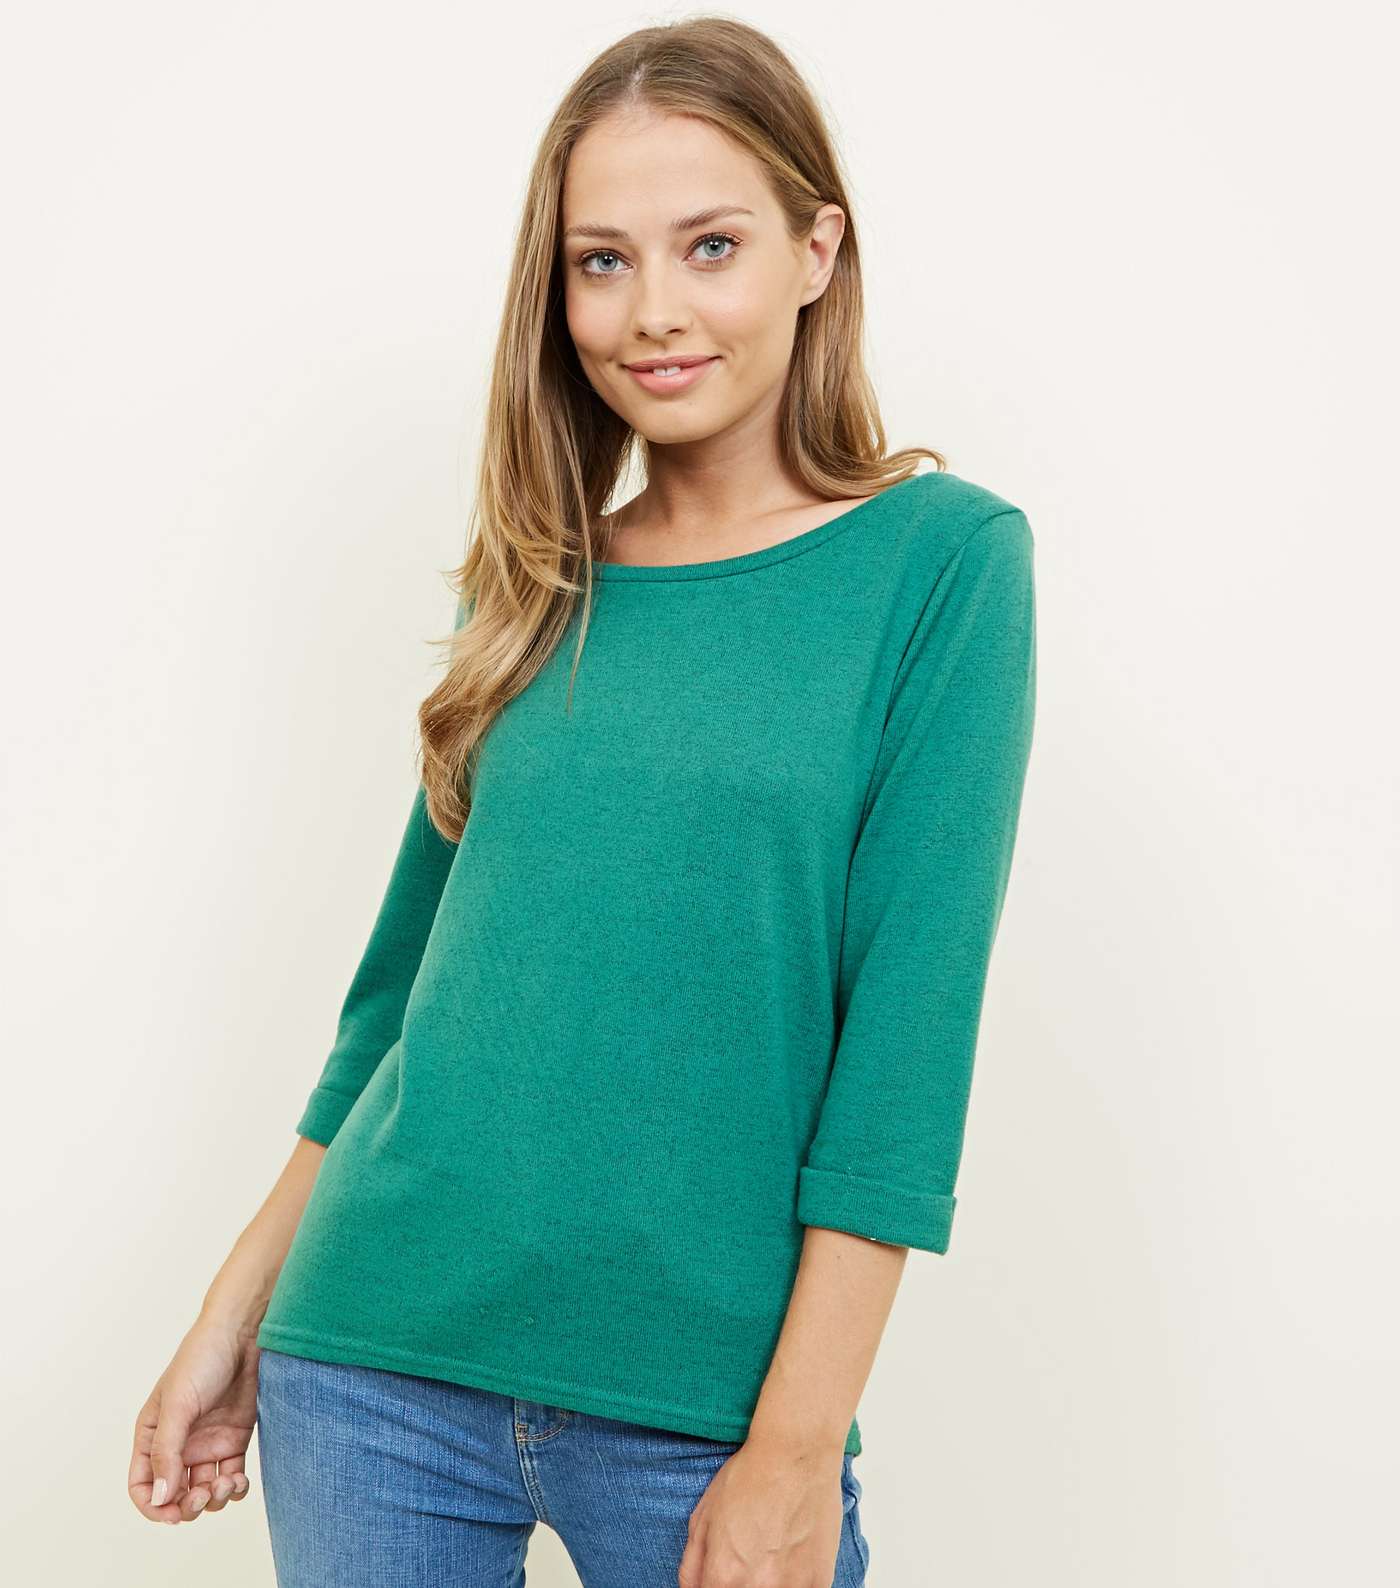 Green 3/4 Sleeve Fine Knit Top